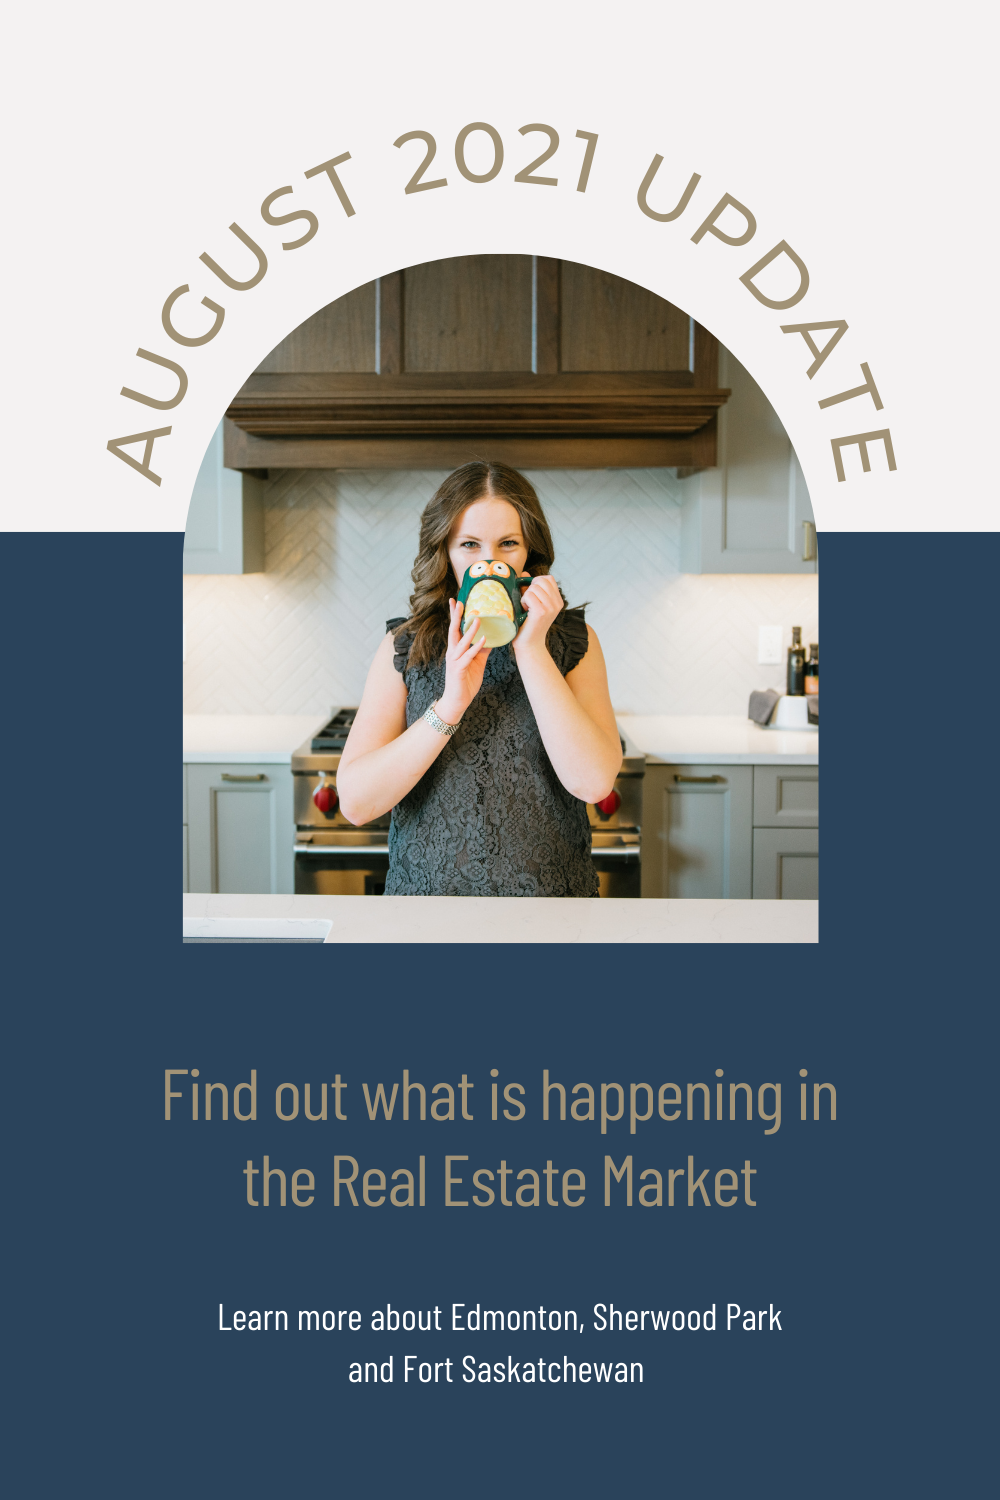 August Real Estate Market Update with Melissa Saretsky for Fort Saskatchewan, Sherwood Park and Edmonton